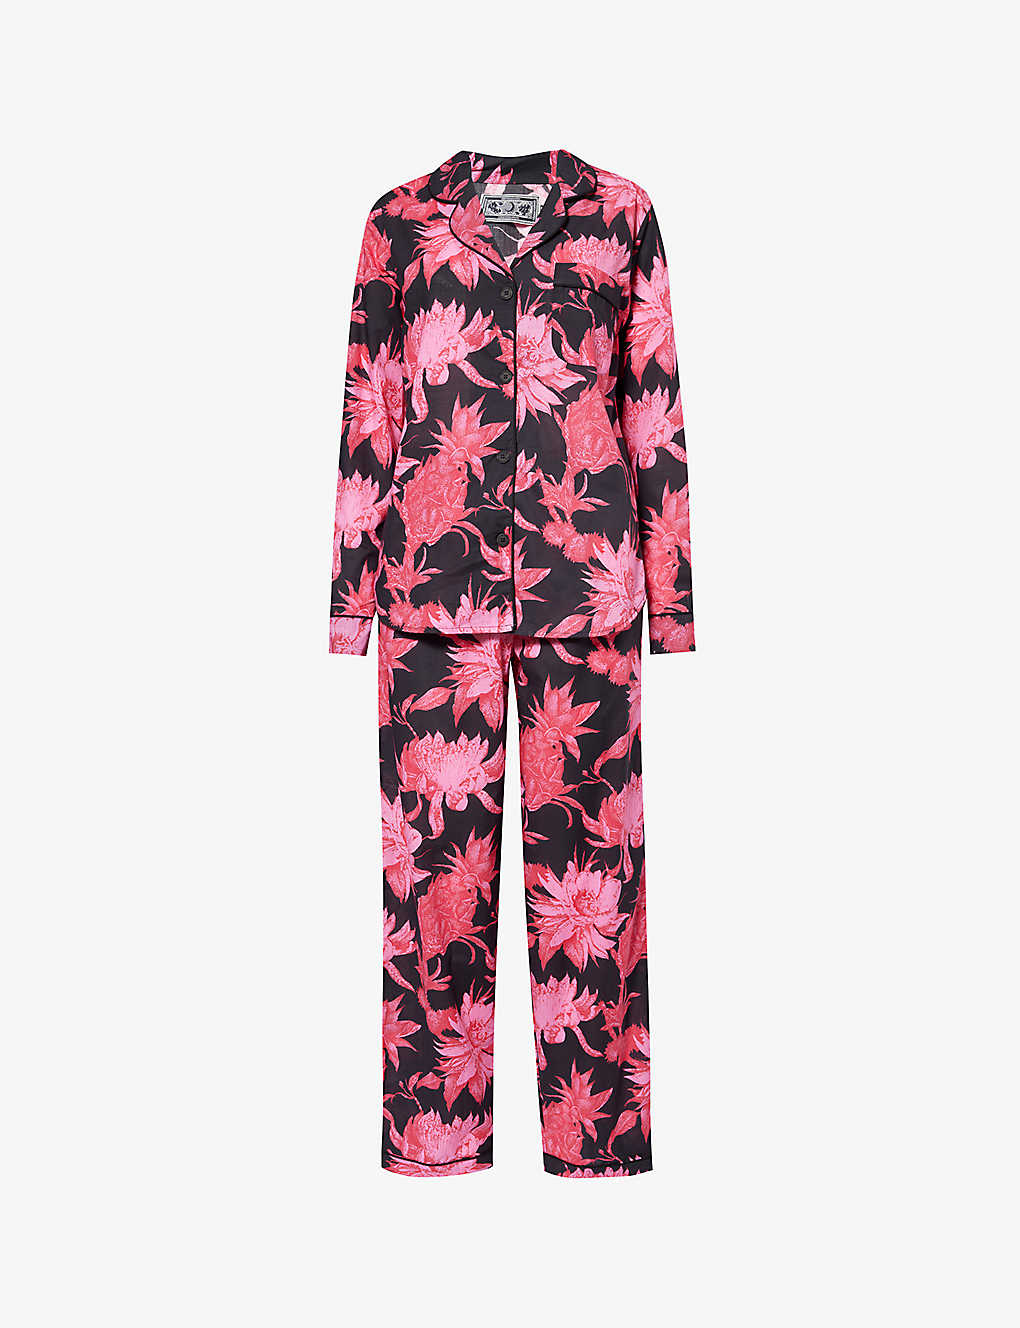 Desmond And Dempsey Floral-print Button-front Cotton Pyjama Set In Black/pink